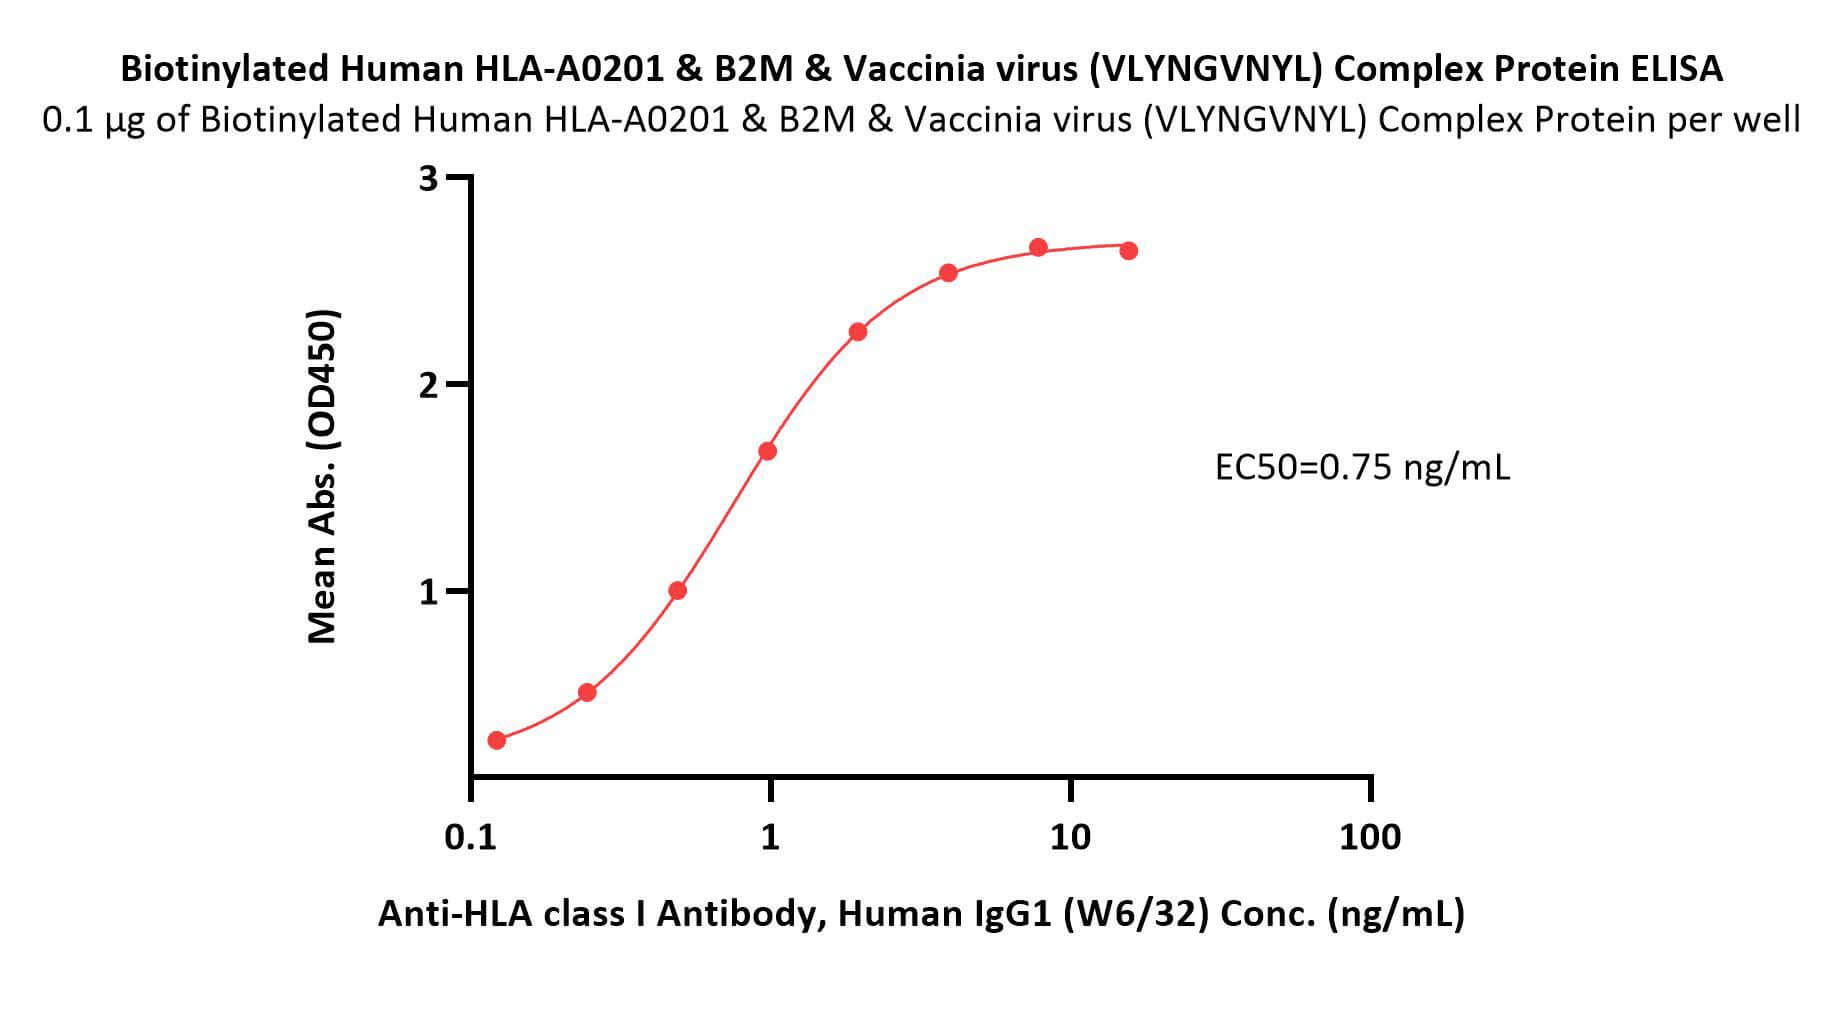 HLA-A*0201 & B2M & Vaccinia virus (VLYNGVNYL) ELISA